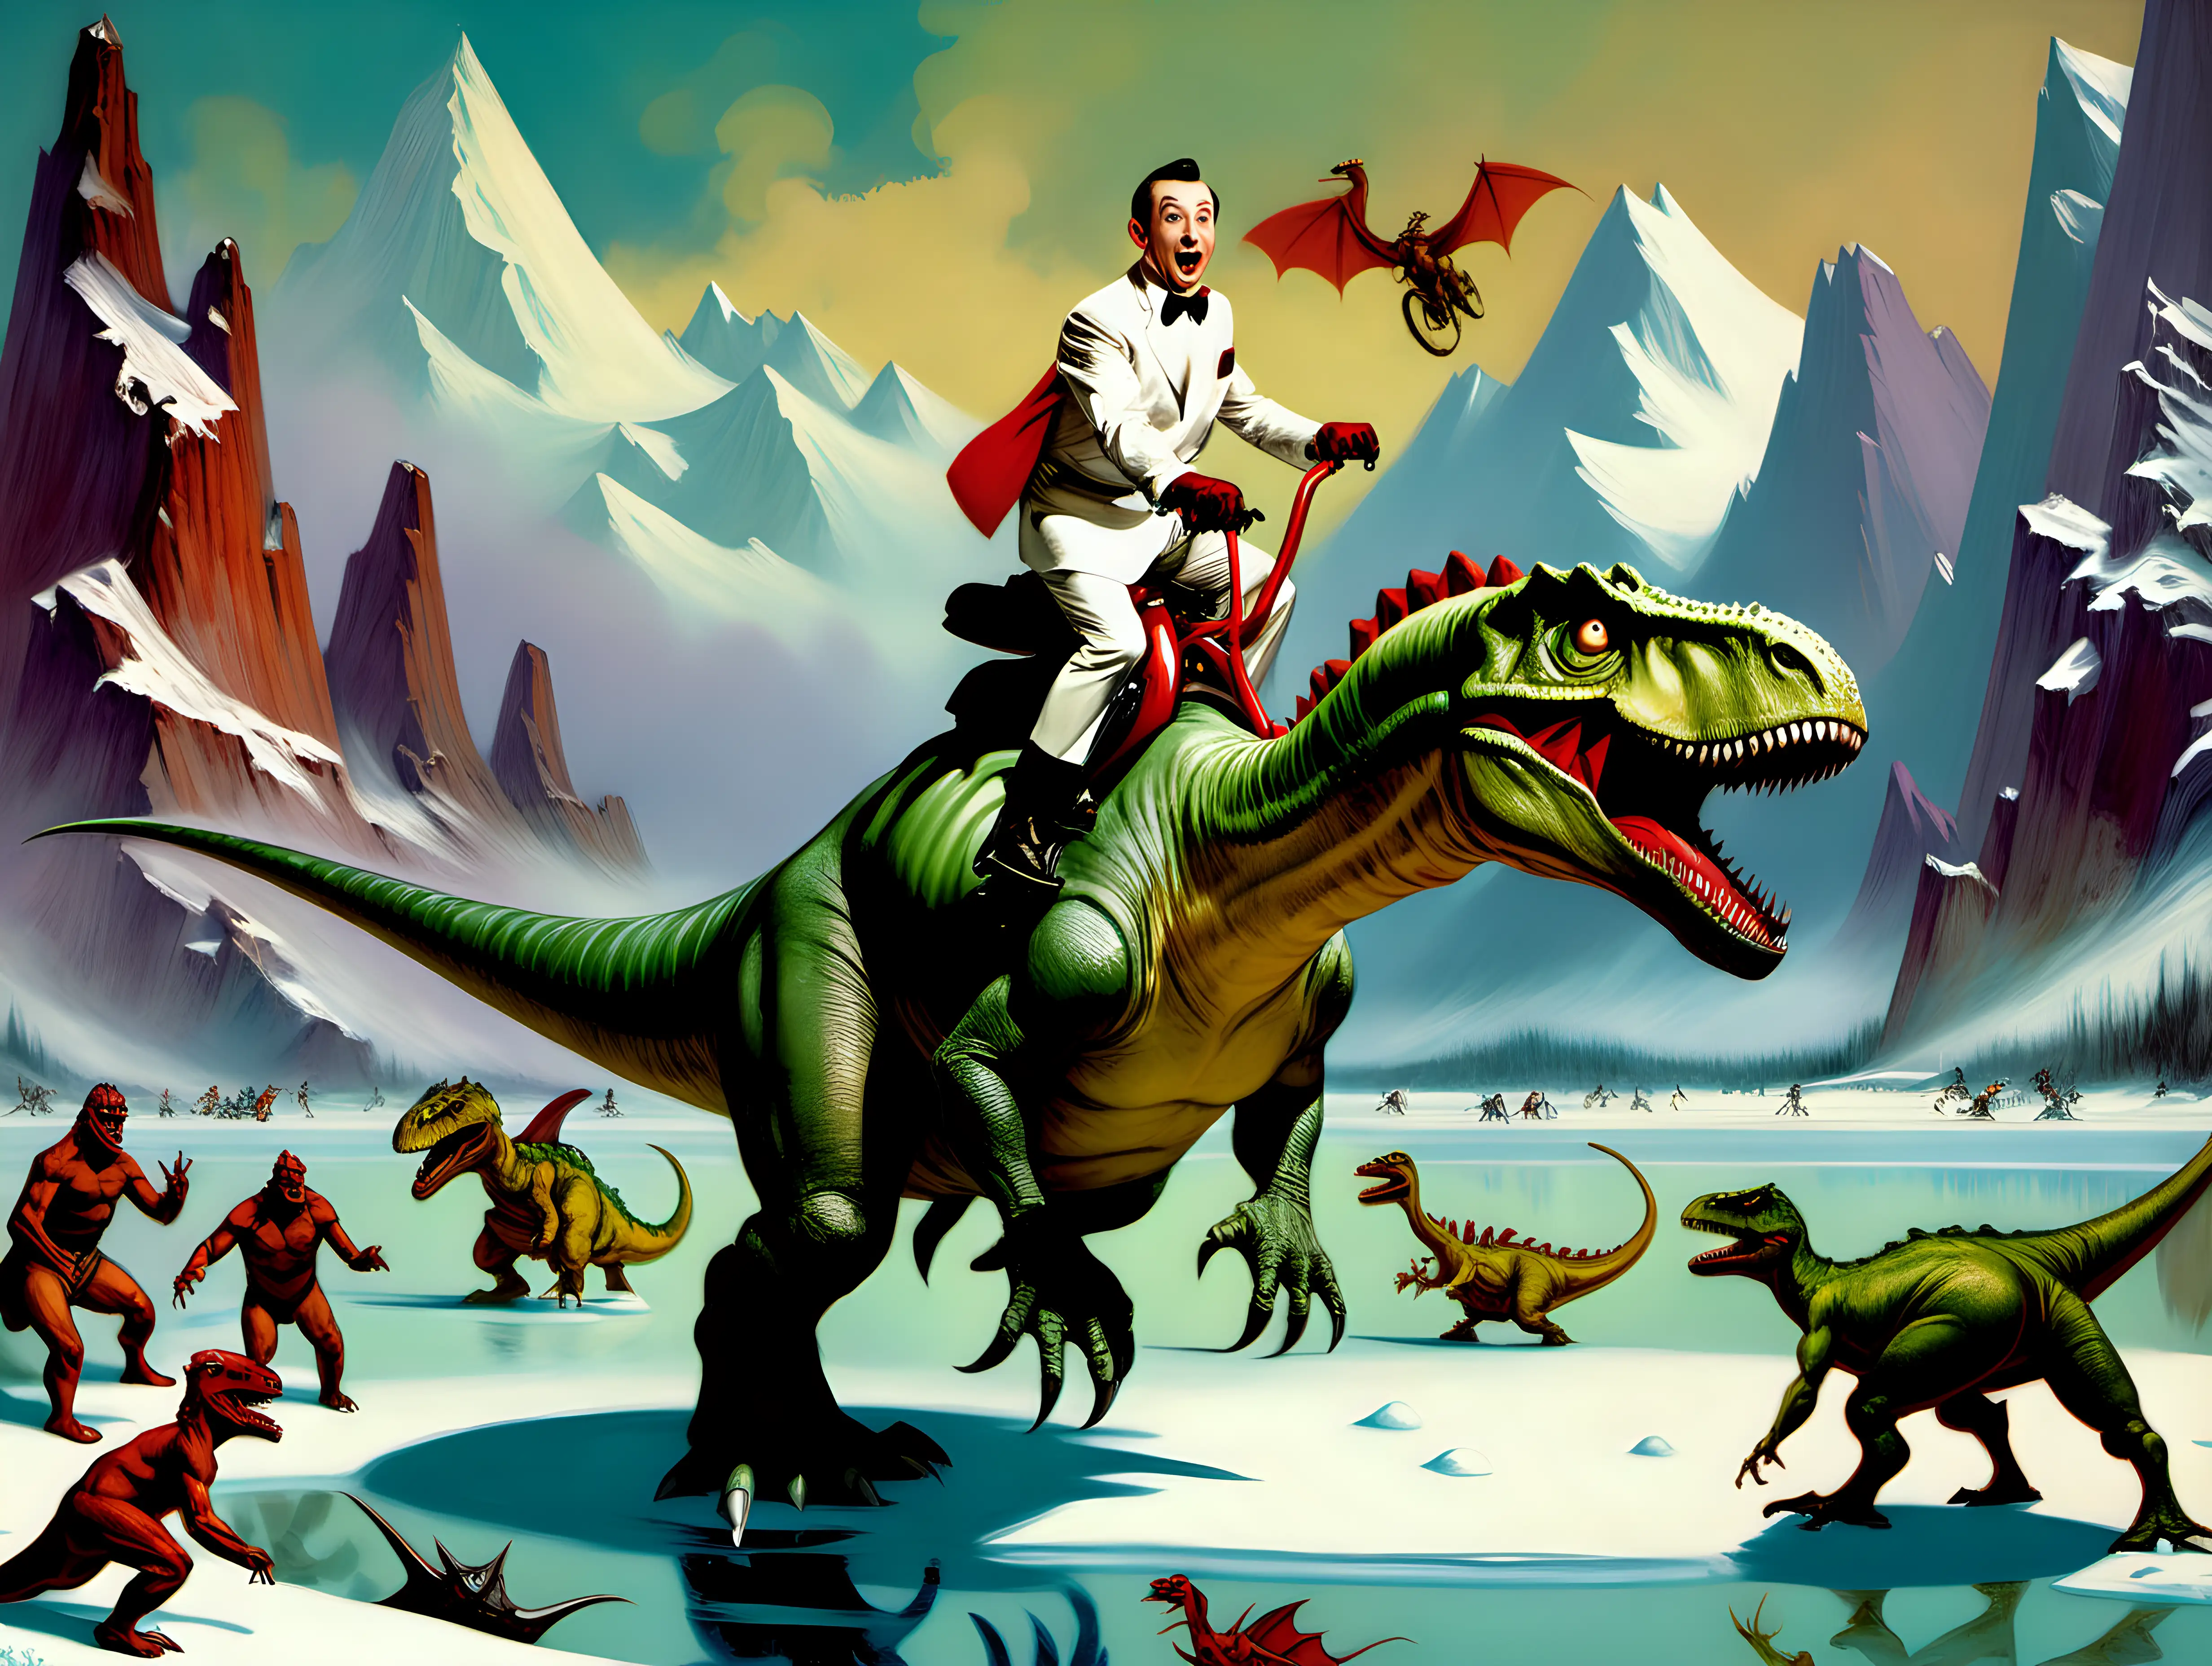 Pee Wee Herman Riding a Dinosaur in Epic Frozen Lake Adventure